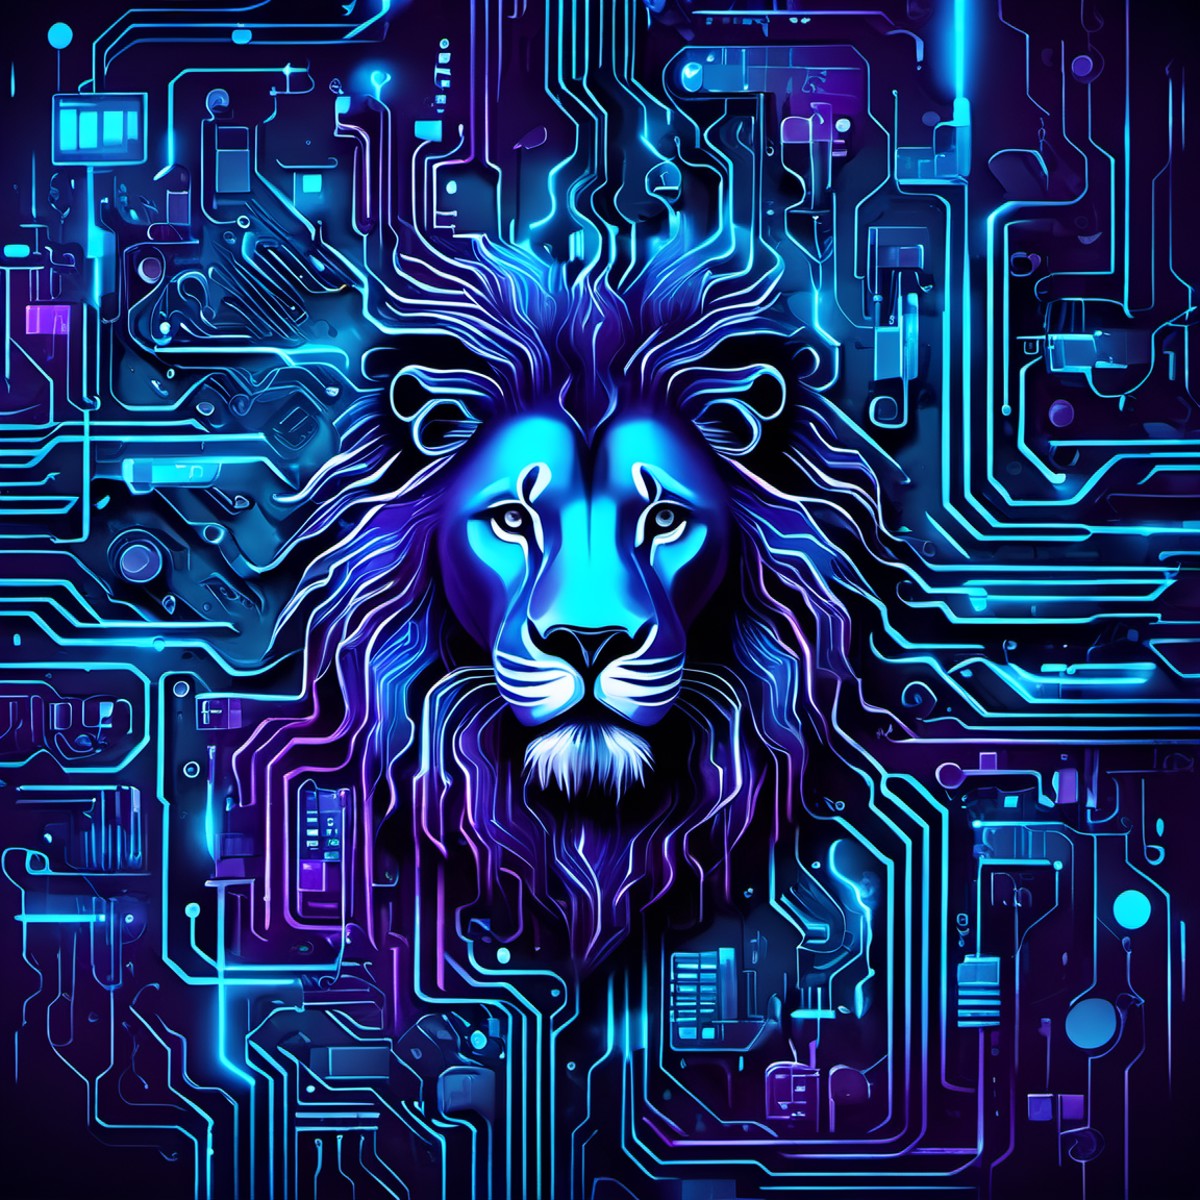 iccircuitart,blue and purple theme,lion,<lora:iccircuitart:1>